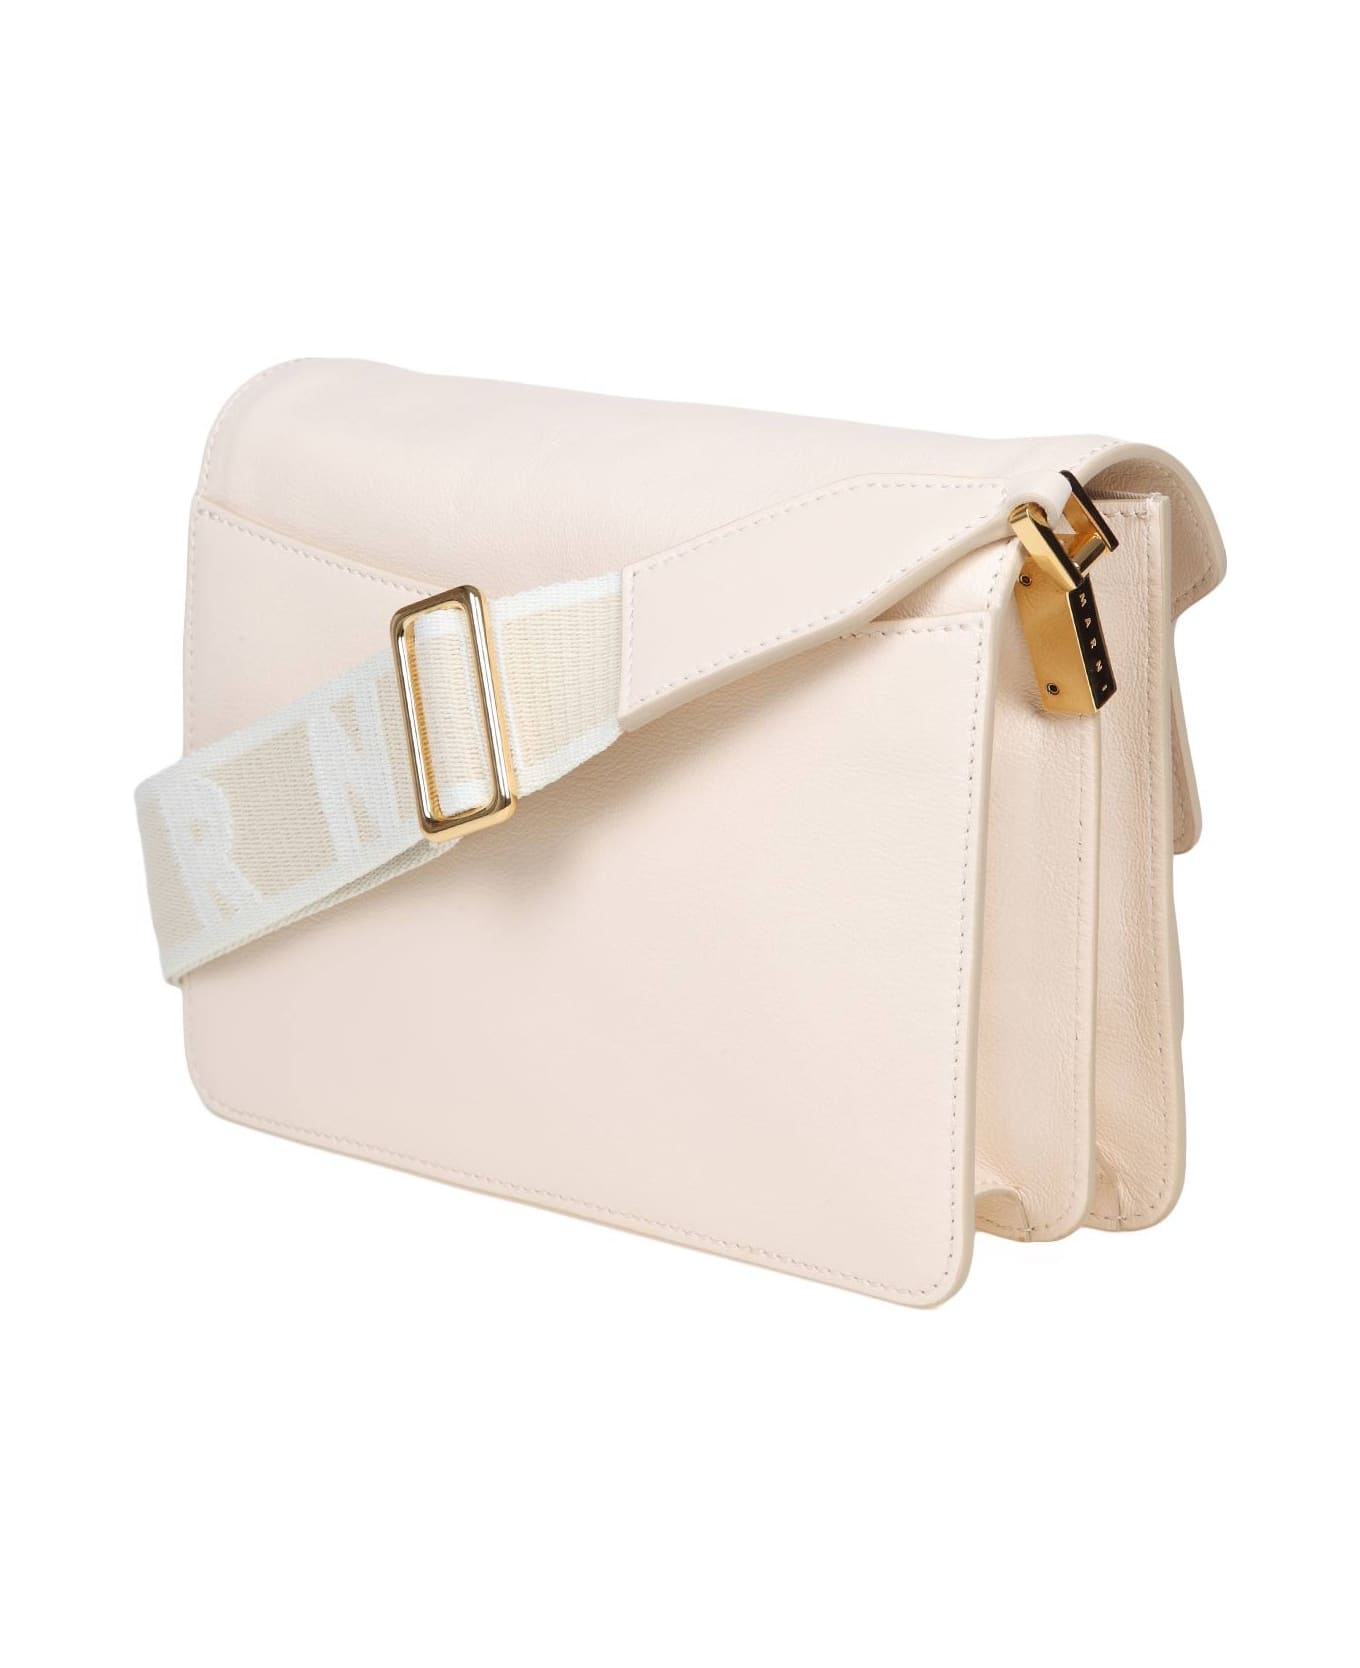 Marni Trunk Soft Shoulder Bag In Cream Color Leather - Cream ショルダーバッグ